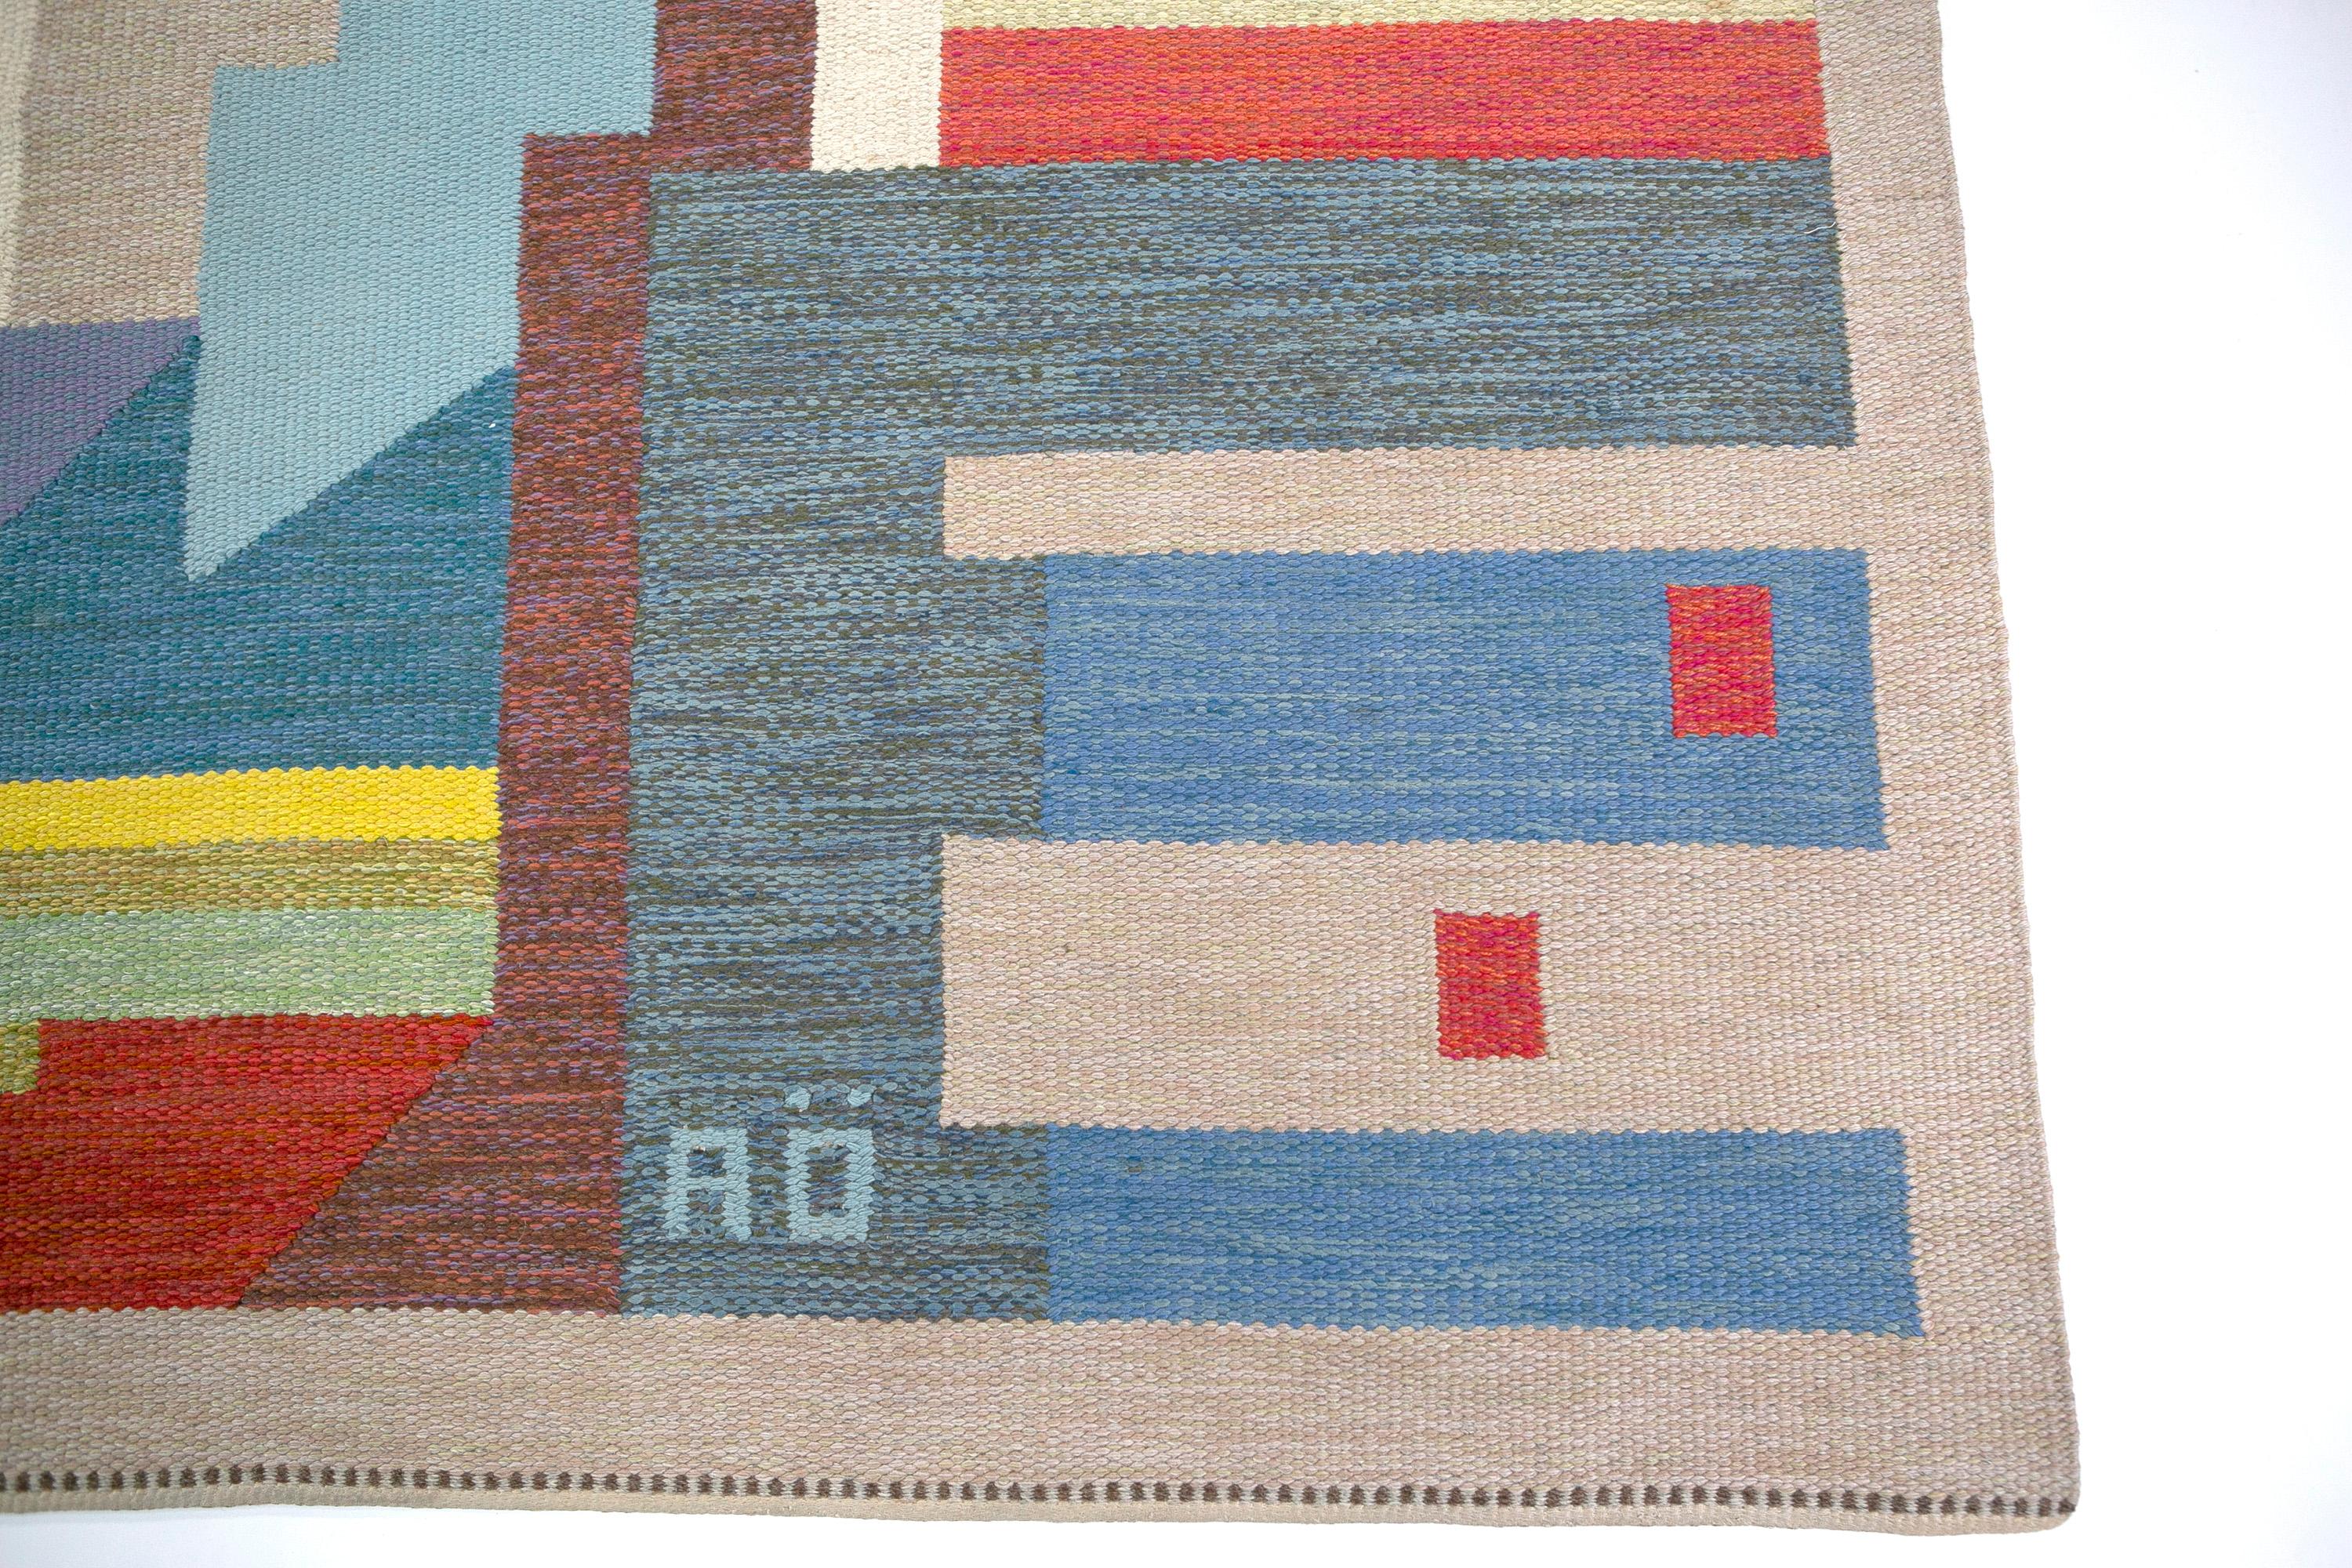 20th Century Agda Österberg Large Flat-Weave Rug No. 210 Signed 